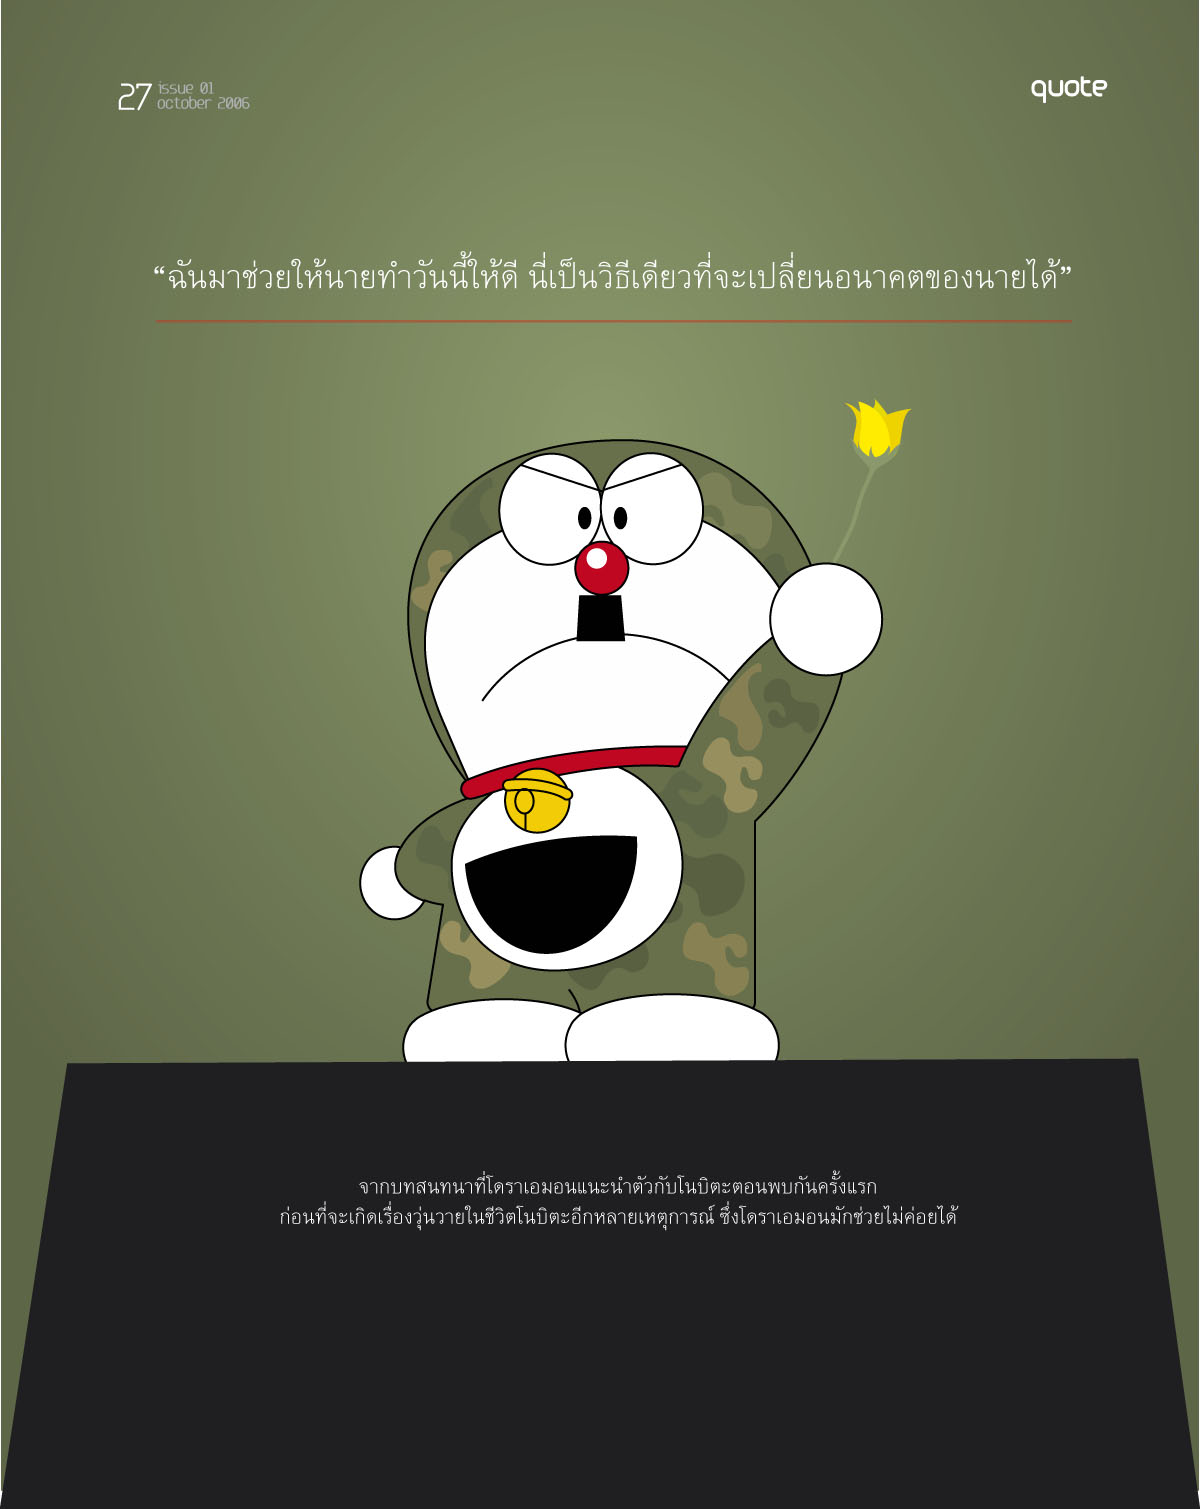  Doraemon  waymagazine org     WAY